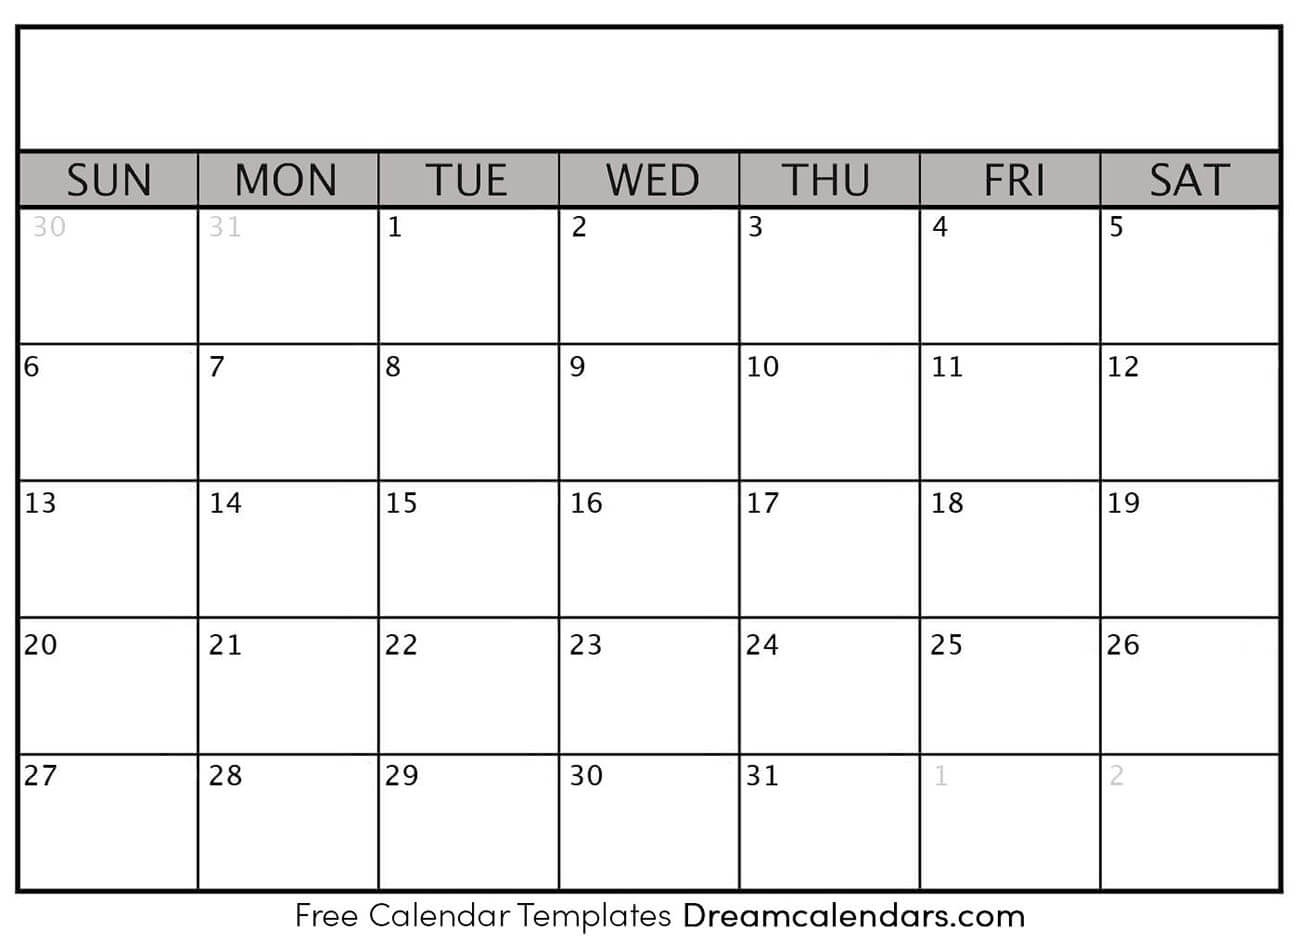 Printable Blank Calendar 2020 | Dream Calendars Dashing Printable Calendar With Date Boxes